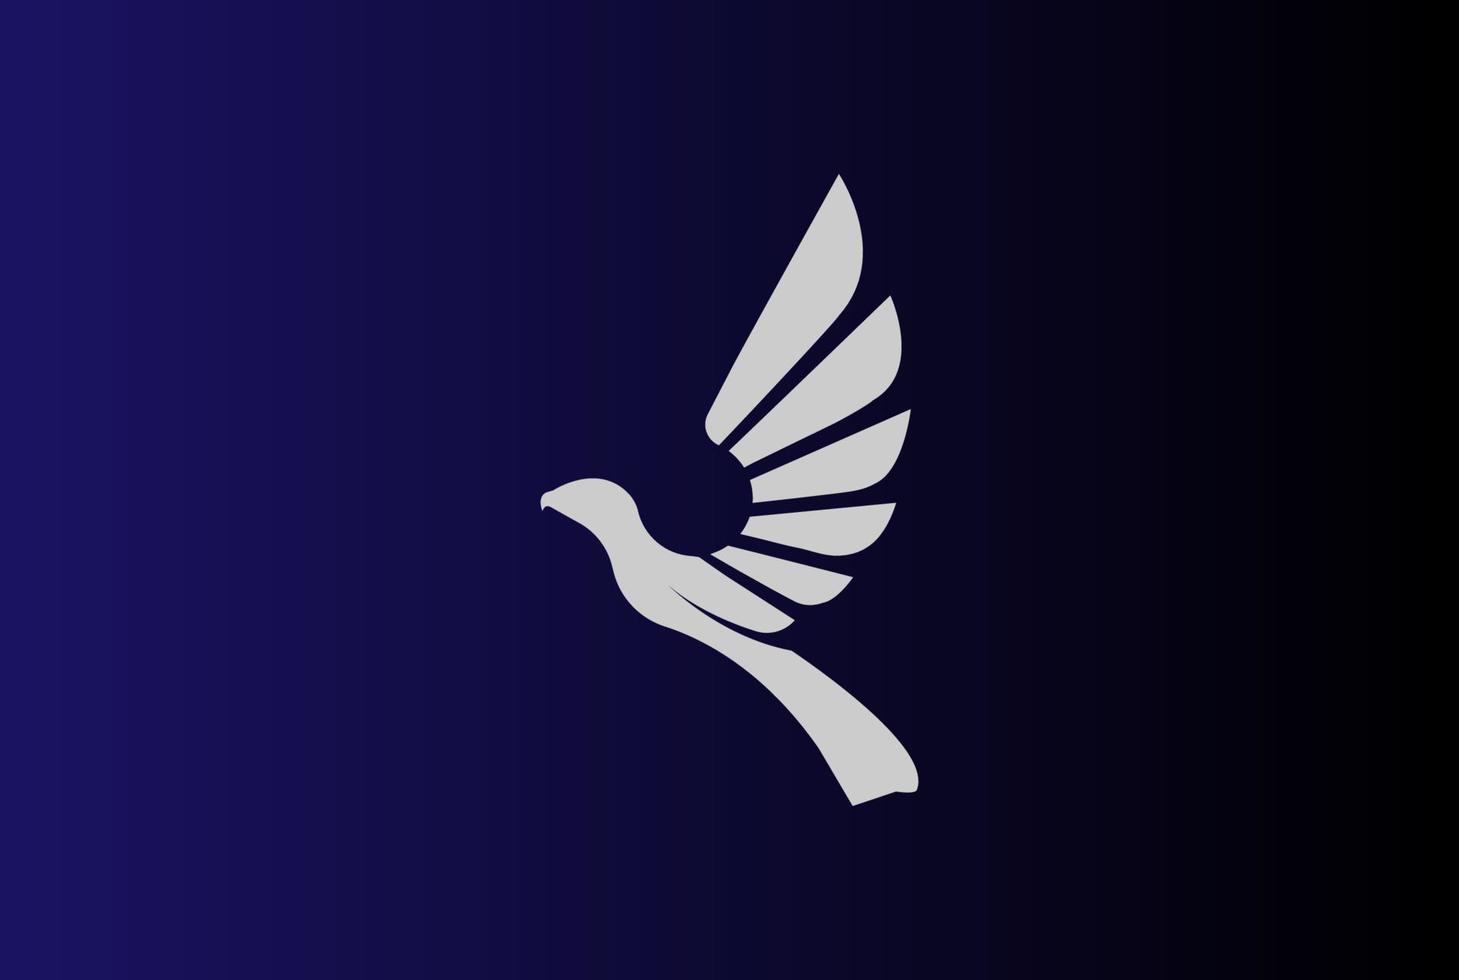 vetor de design de logotipo de fênix de águia de pássaro voador geométrico simples